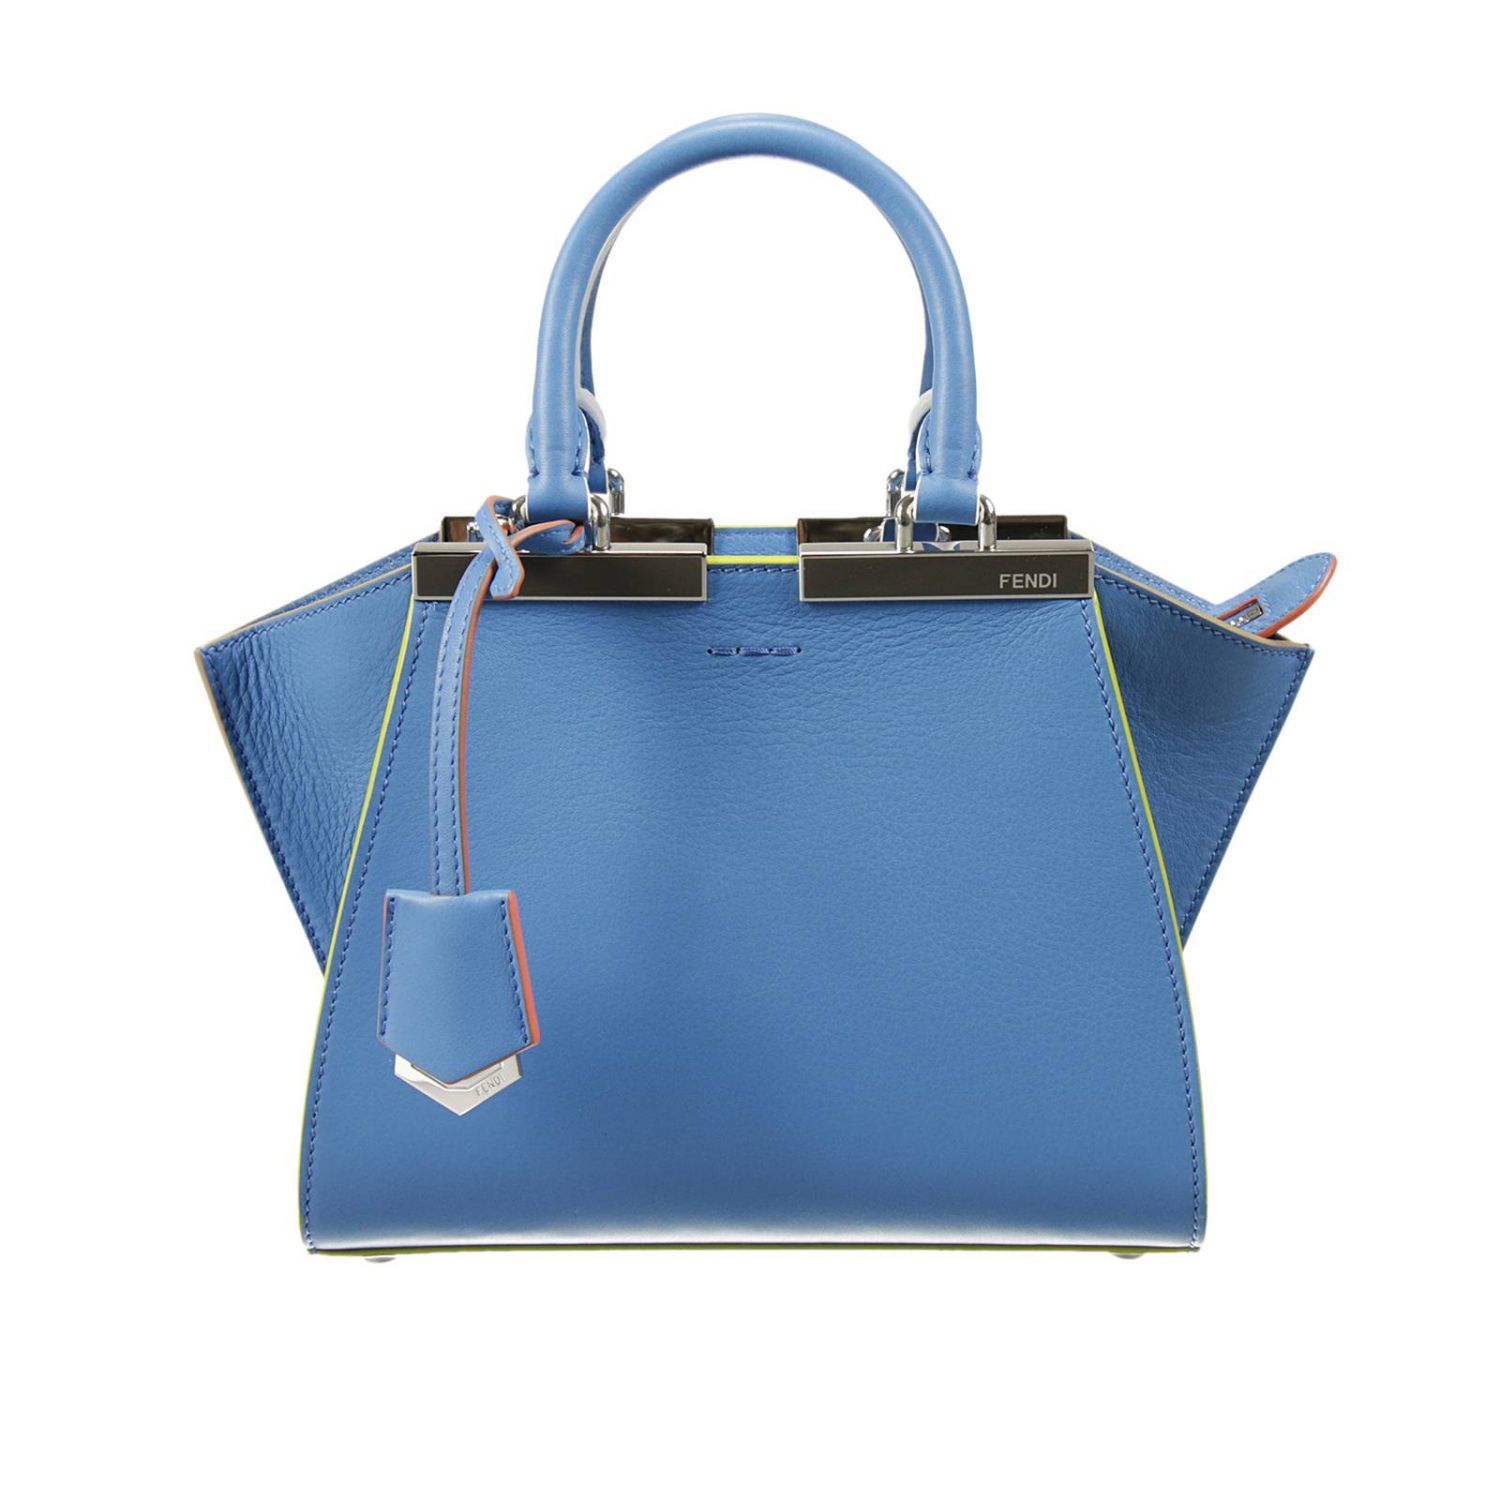 FENDI: | Tote Bags Fendi Women Royal Blue | Tote Bags Fendi 8bh333 5c3 ...